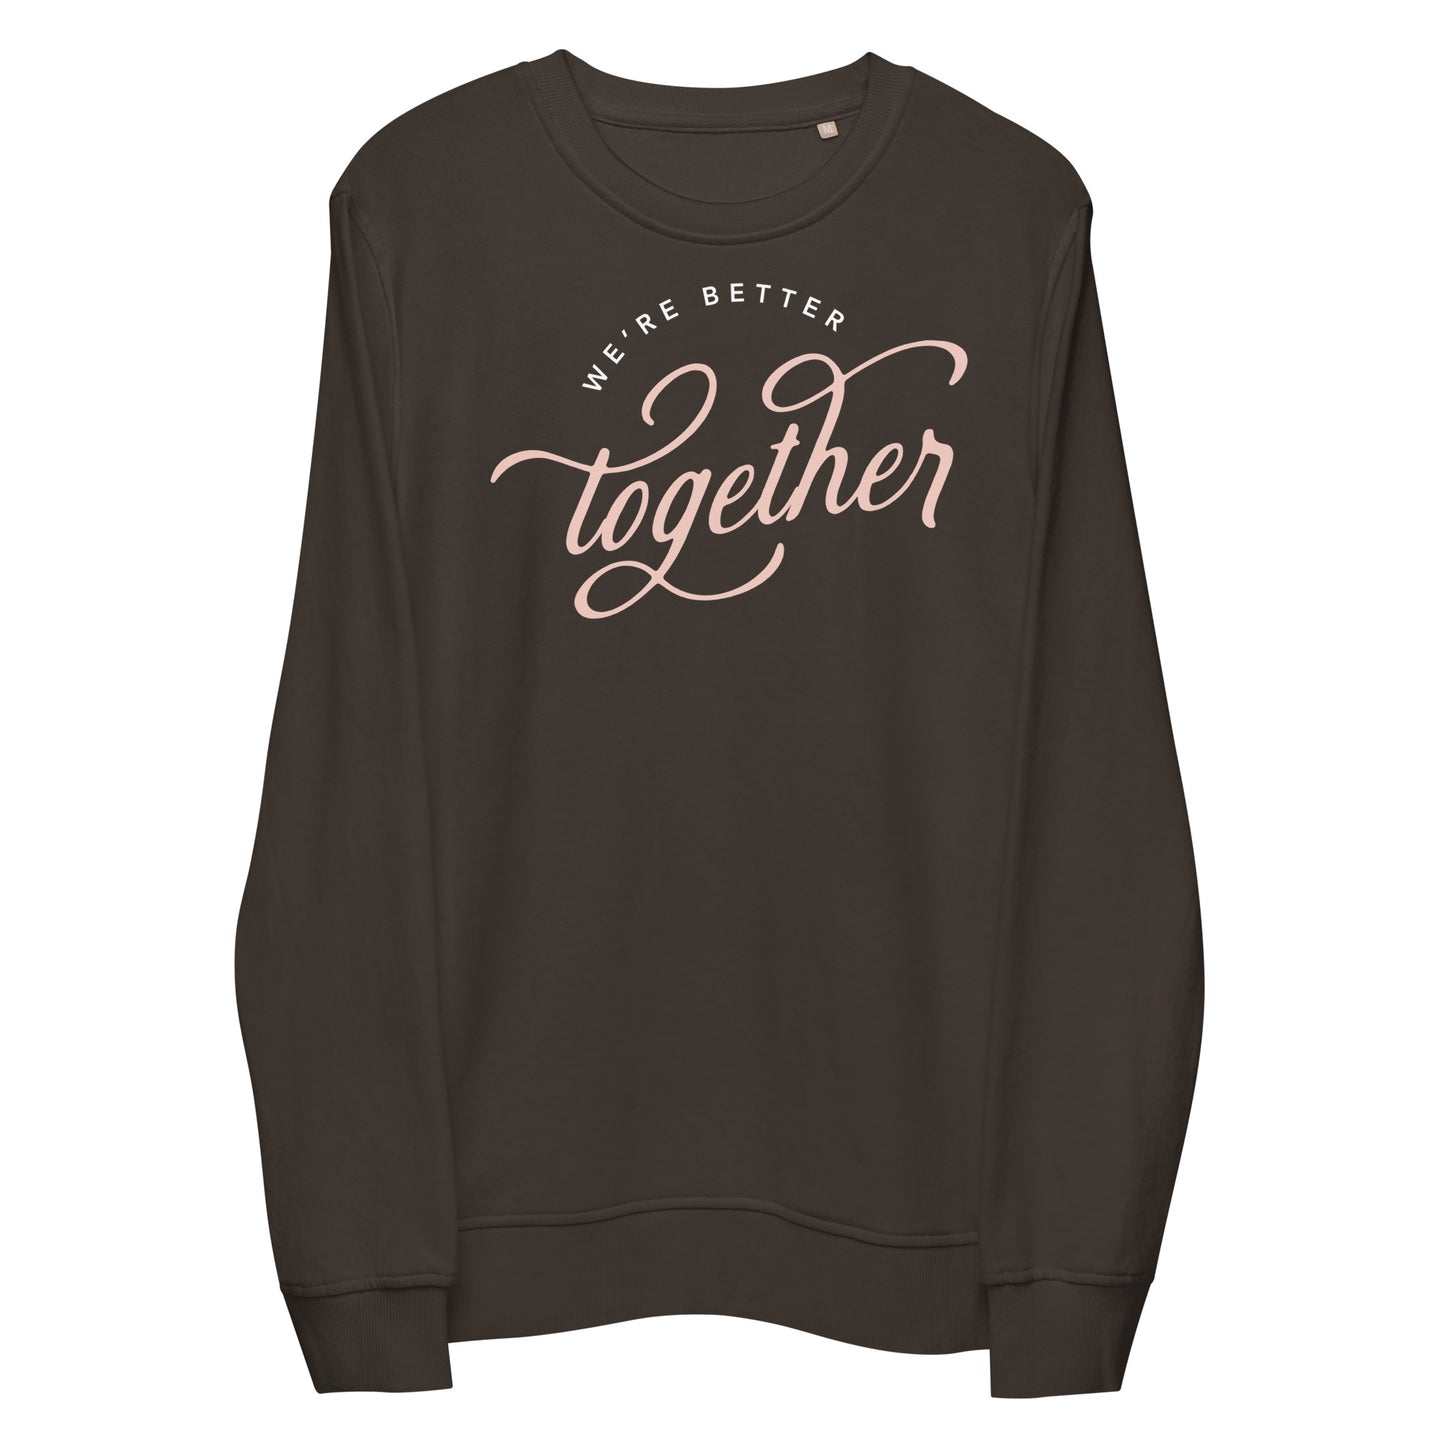 We're Better Together Sweatshirt